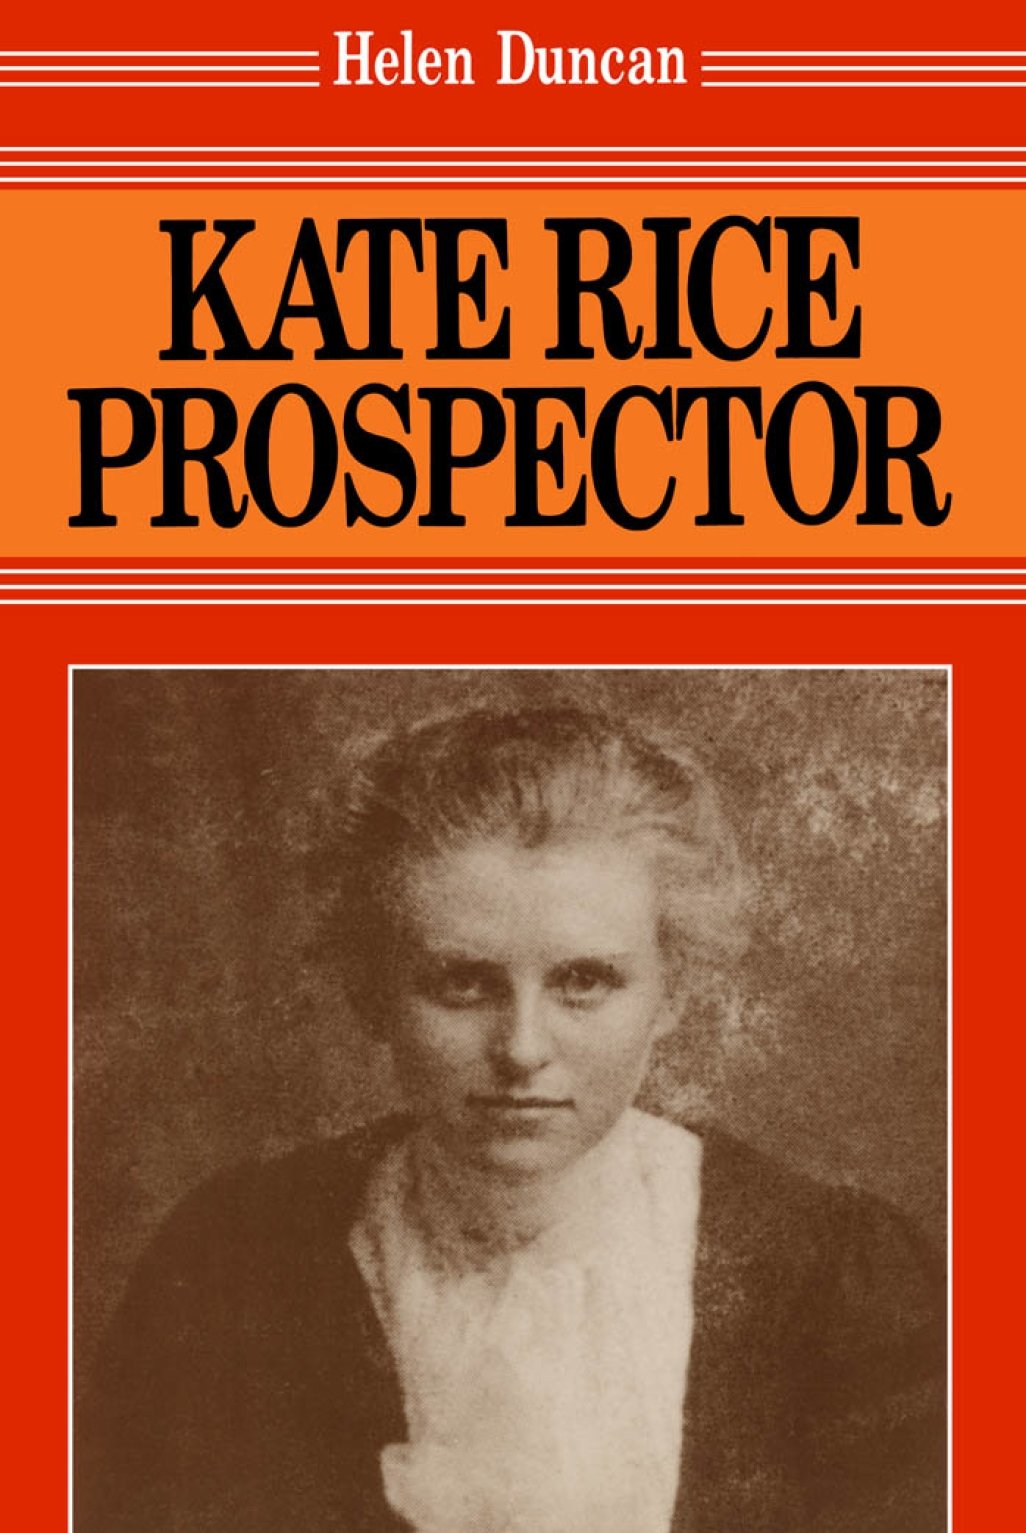 Kate Rice: Prospector